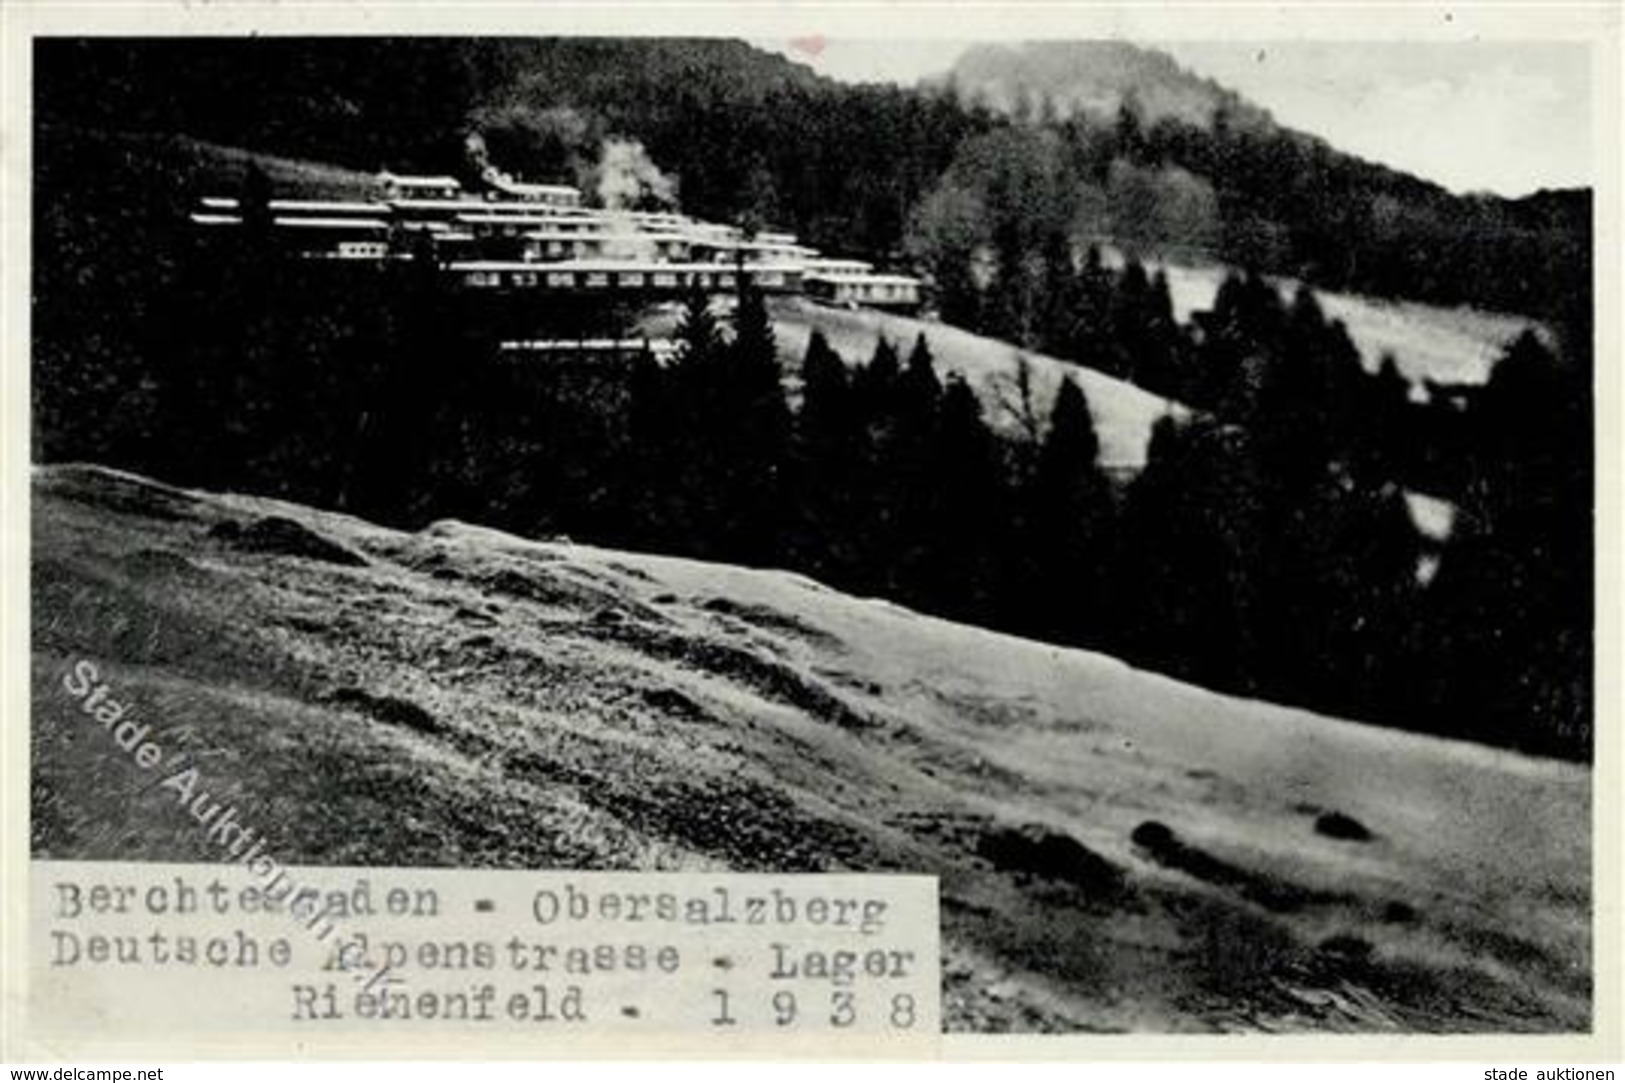 RAD Obersalzberg (8240) Lager Riemerfeld I-II - Weltkrieg 1939-45